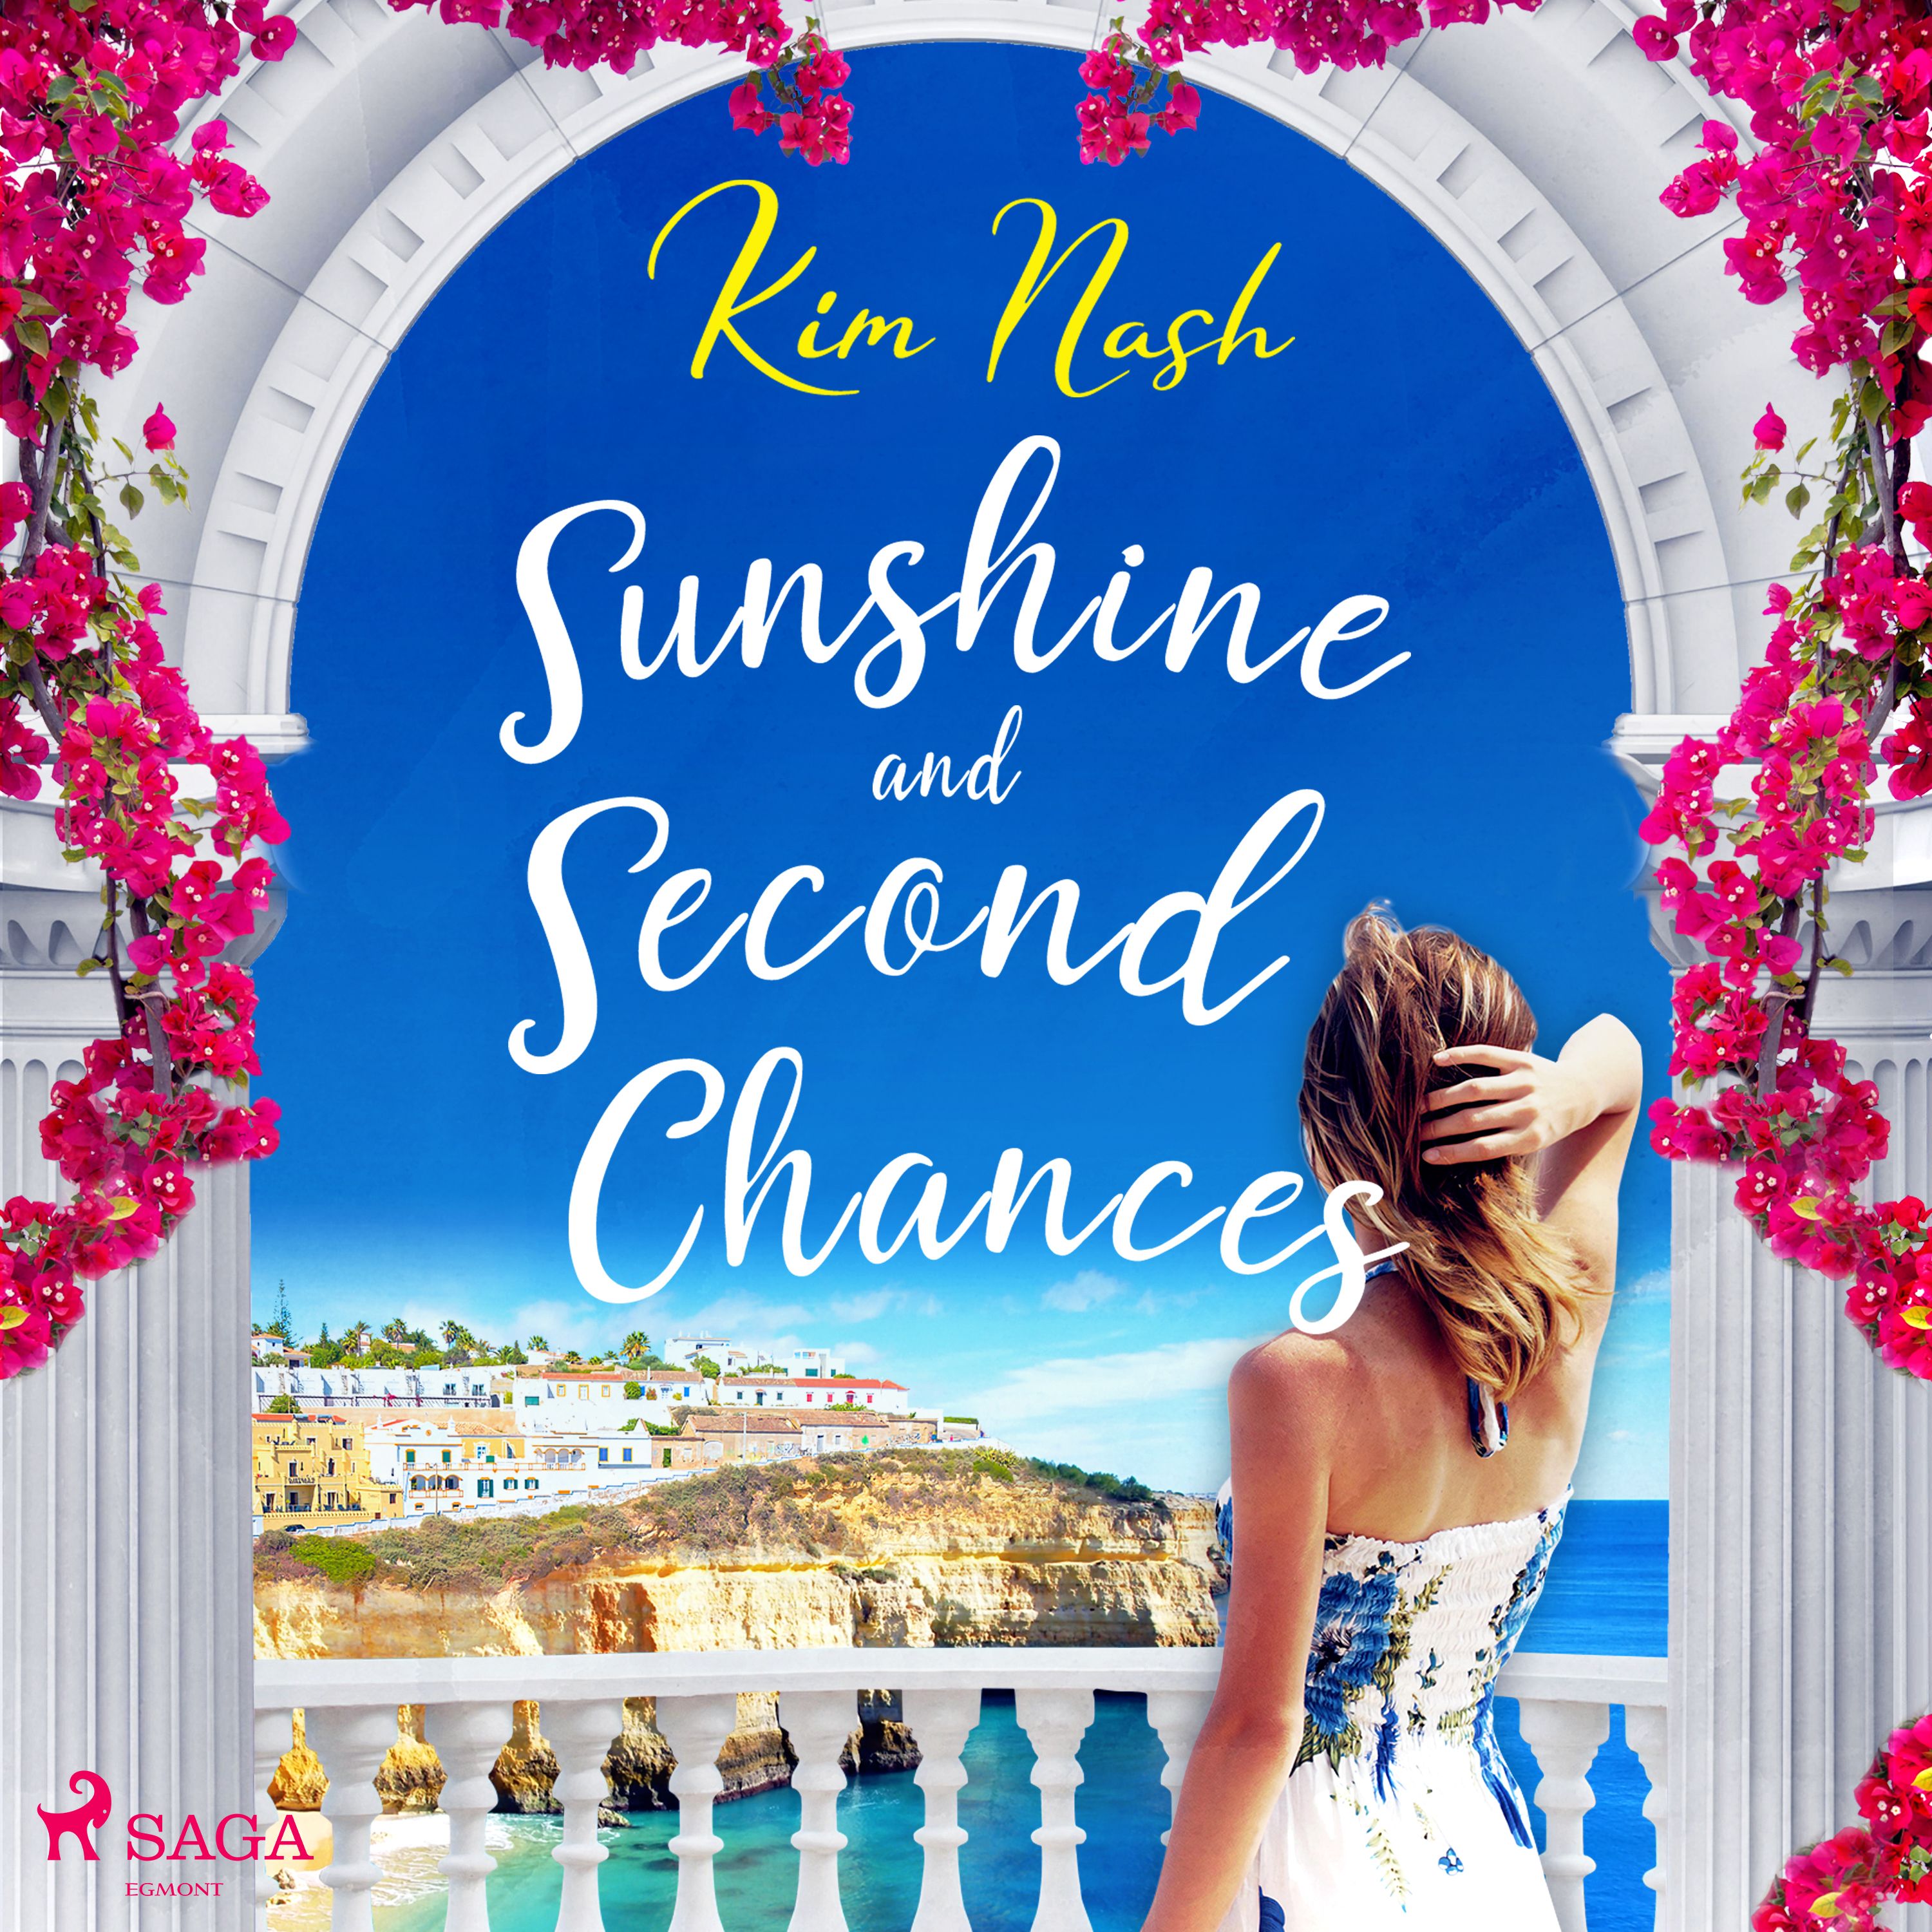 Sunshine and Second Chances, ljudbok av Kim Nash